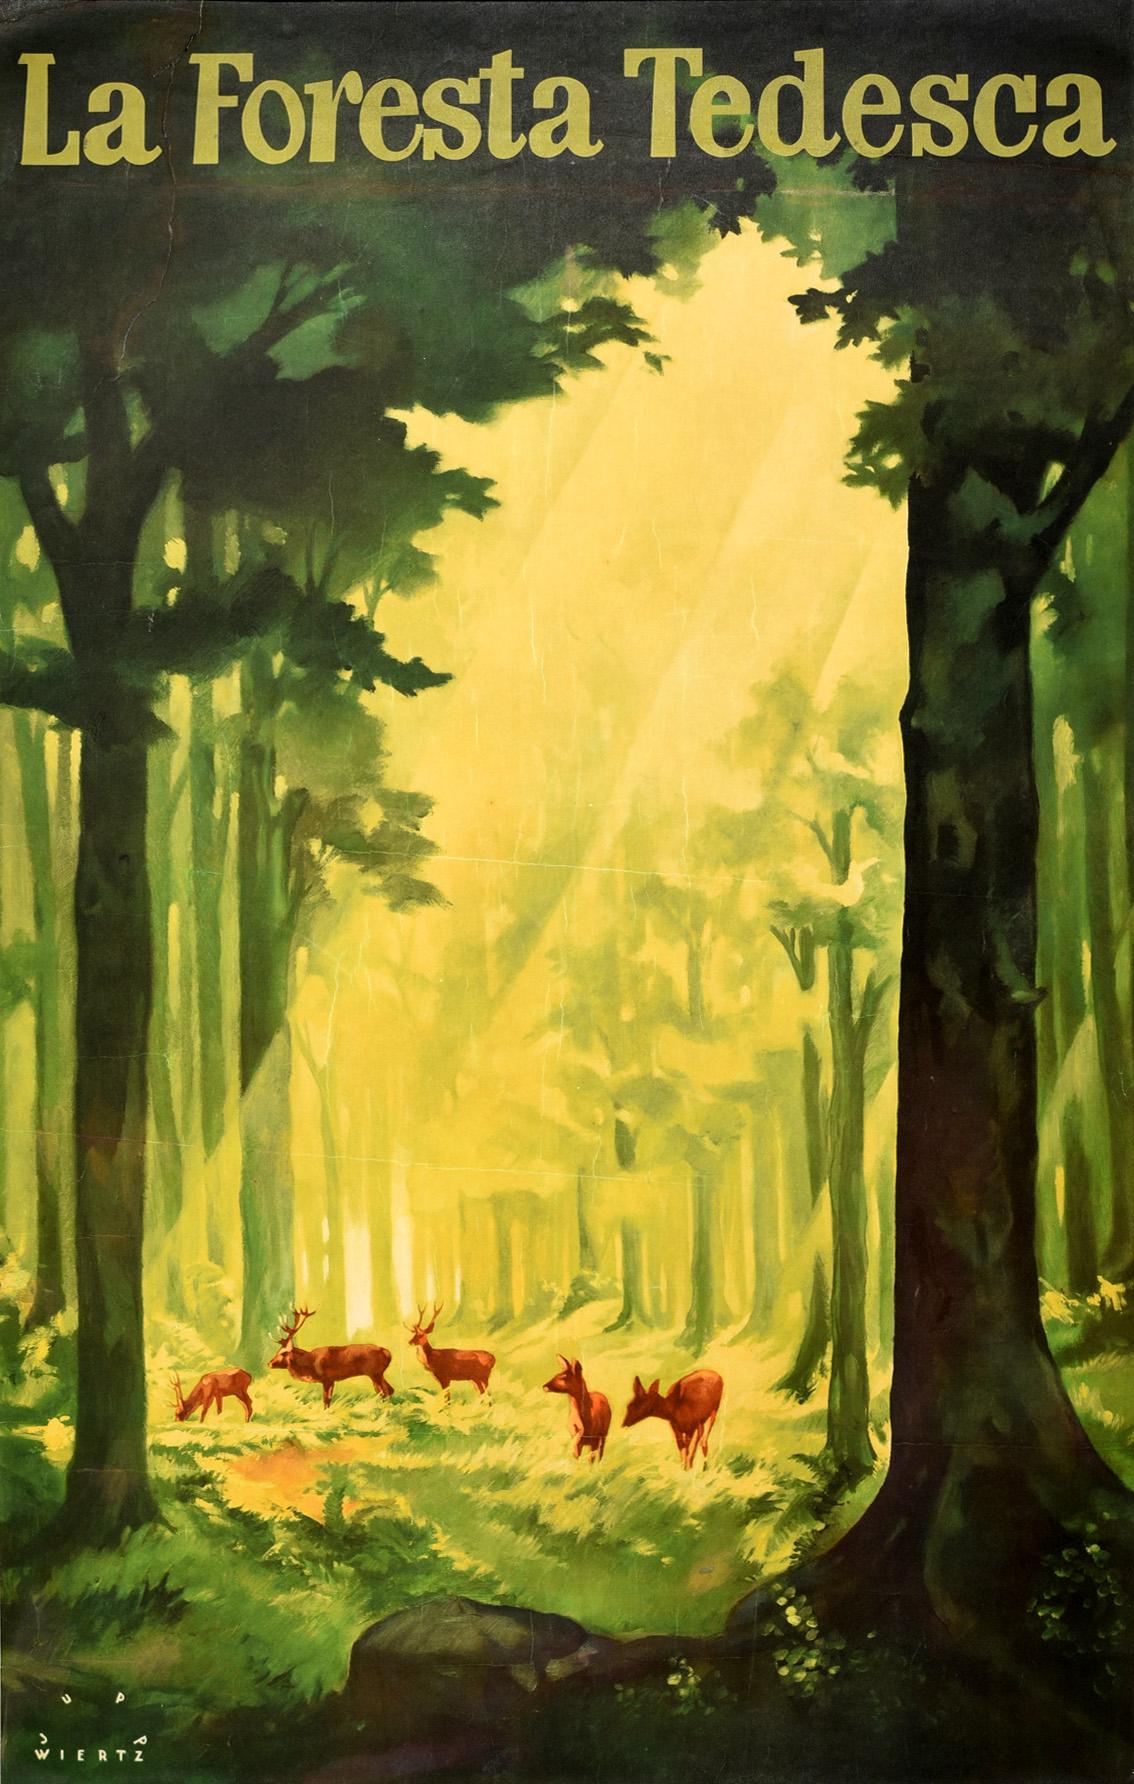 Jupp Wiertz Print - Original Vintage Travel Poster The German Forest La Foresta Tedesca Deer Trees